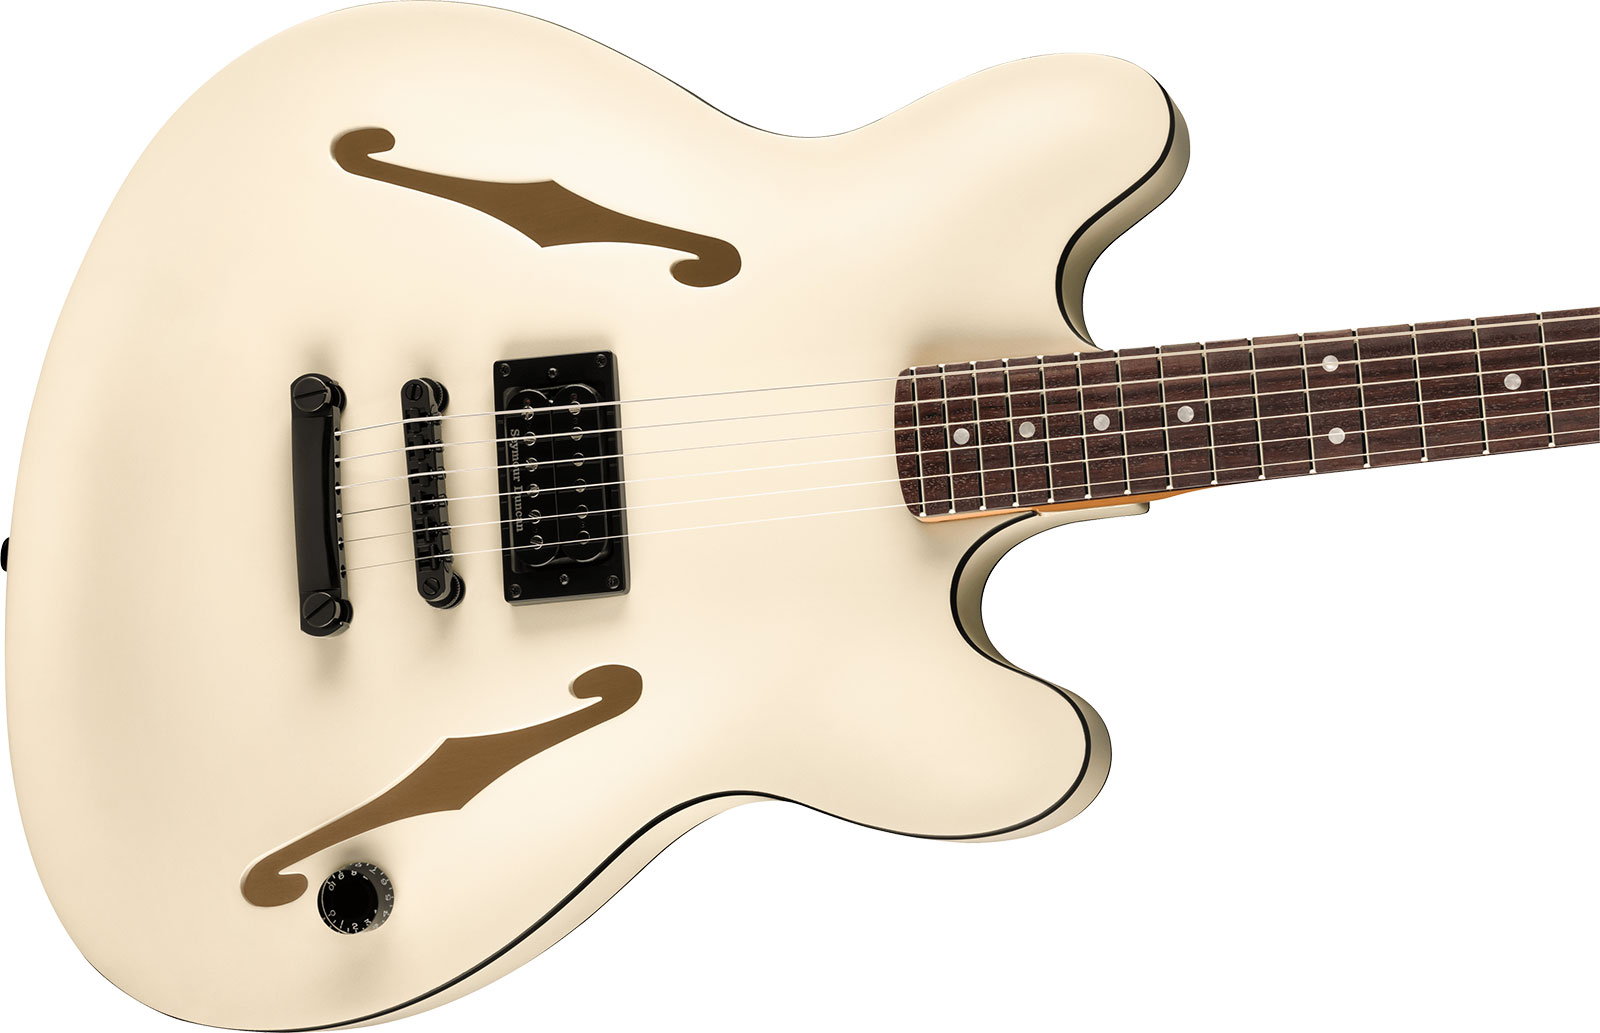 Fender Tom Delonge Starcaster Signature 1h Seymour Duncan Ht Rw - Satin Olympic White - Semi hollow elektriche gitaar - Variation 2